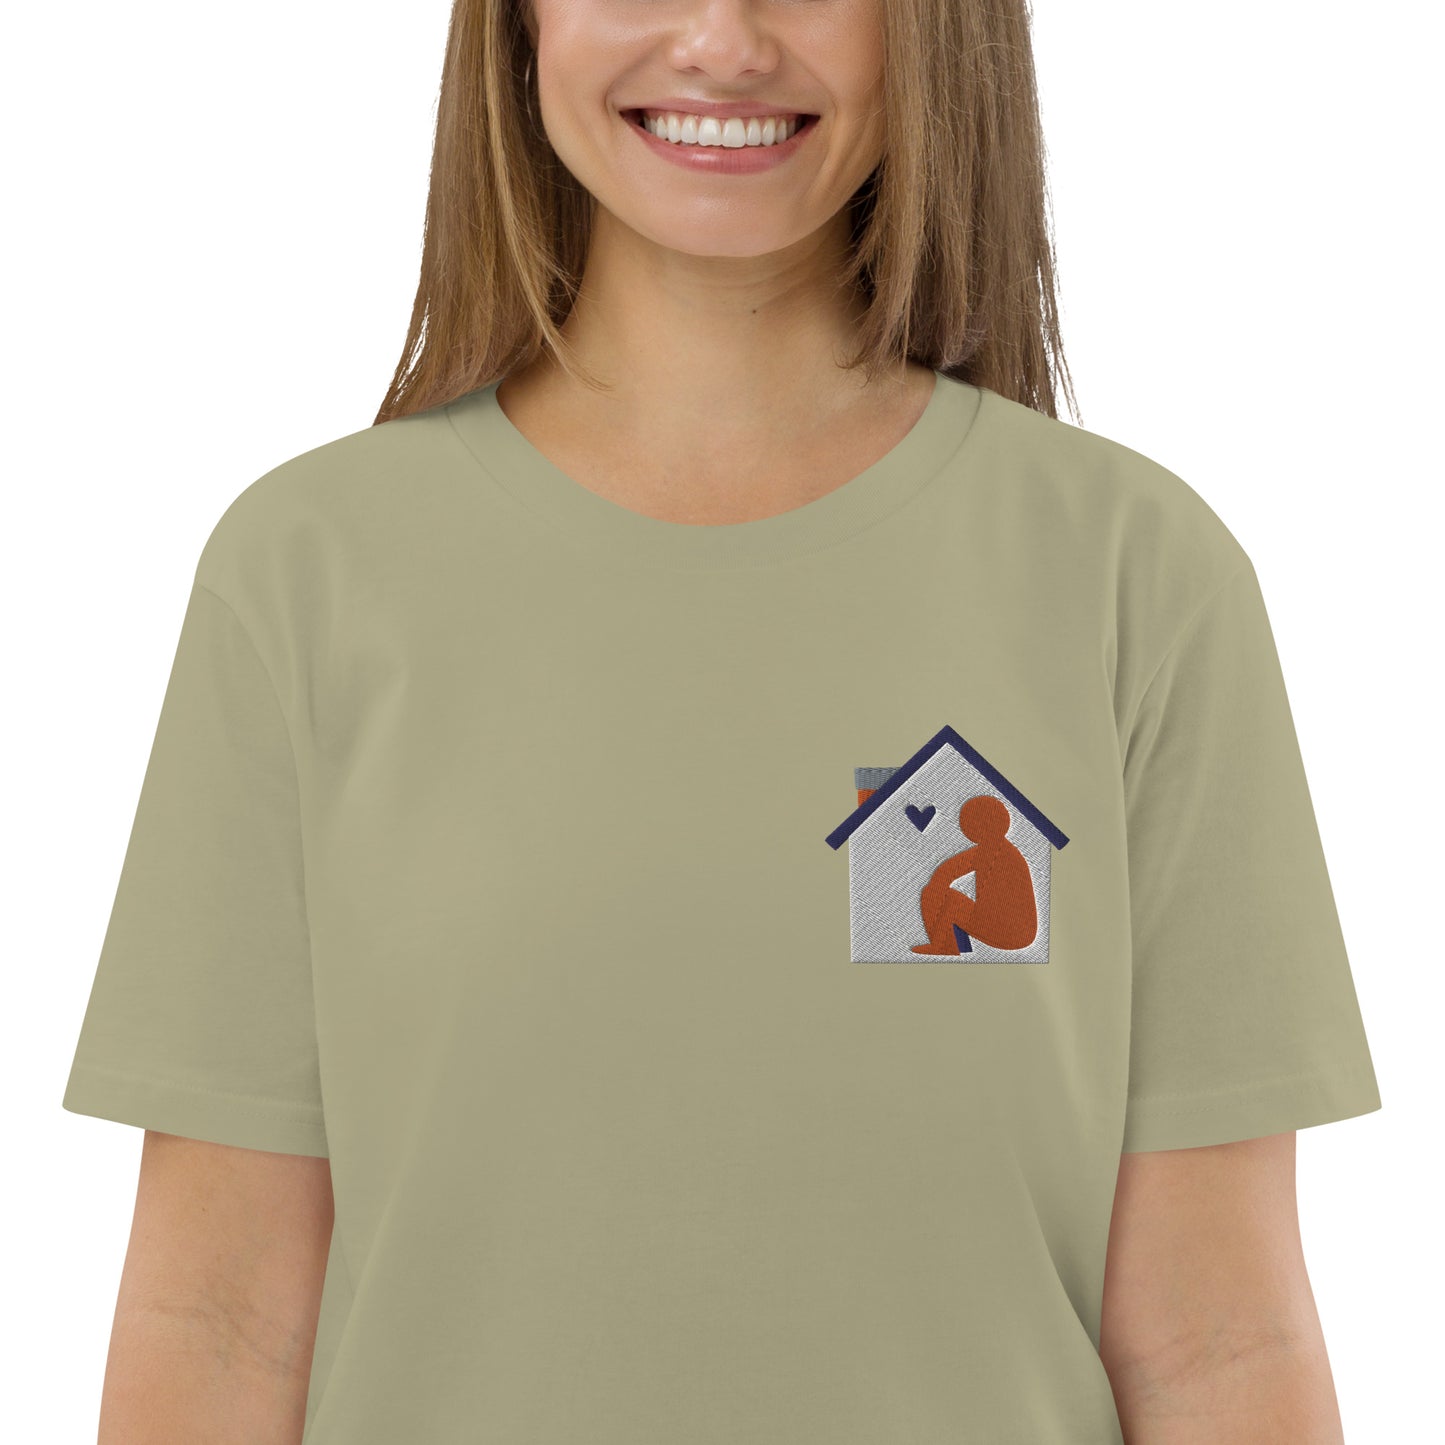 Housing is a Human Right - Organic Cotton T-shirt